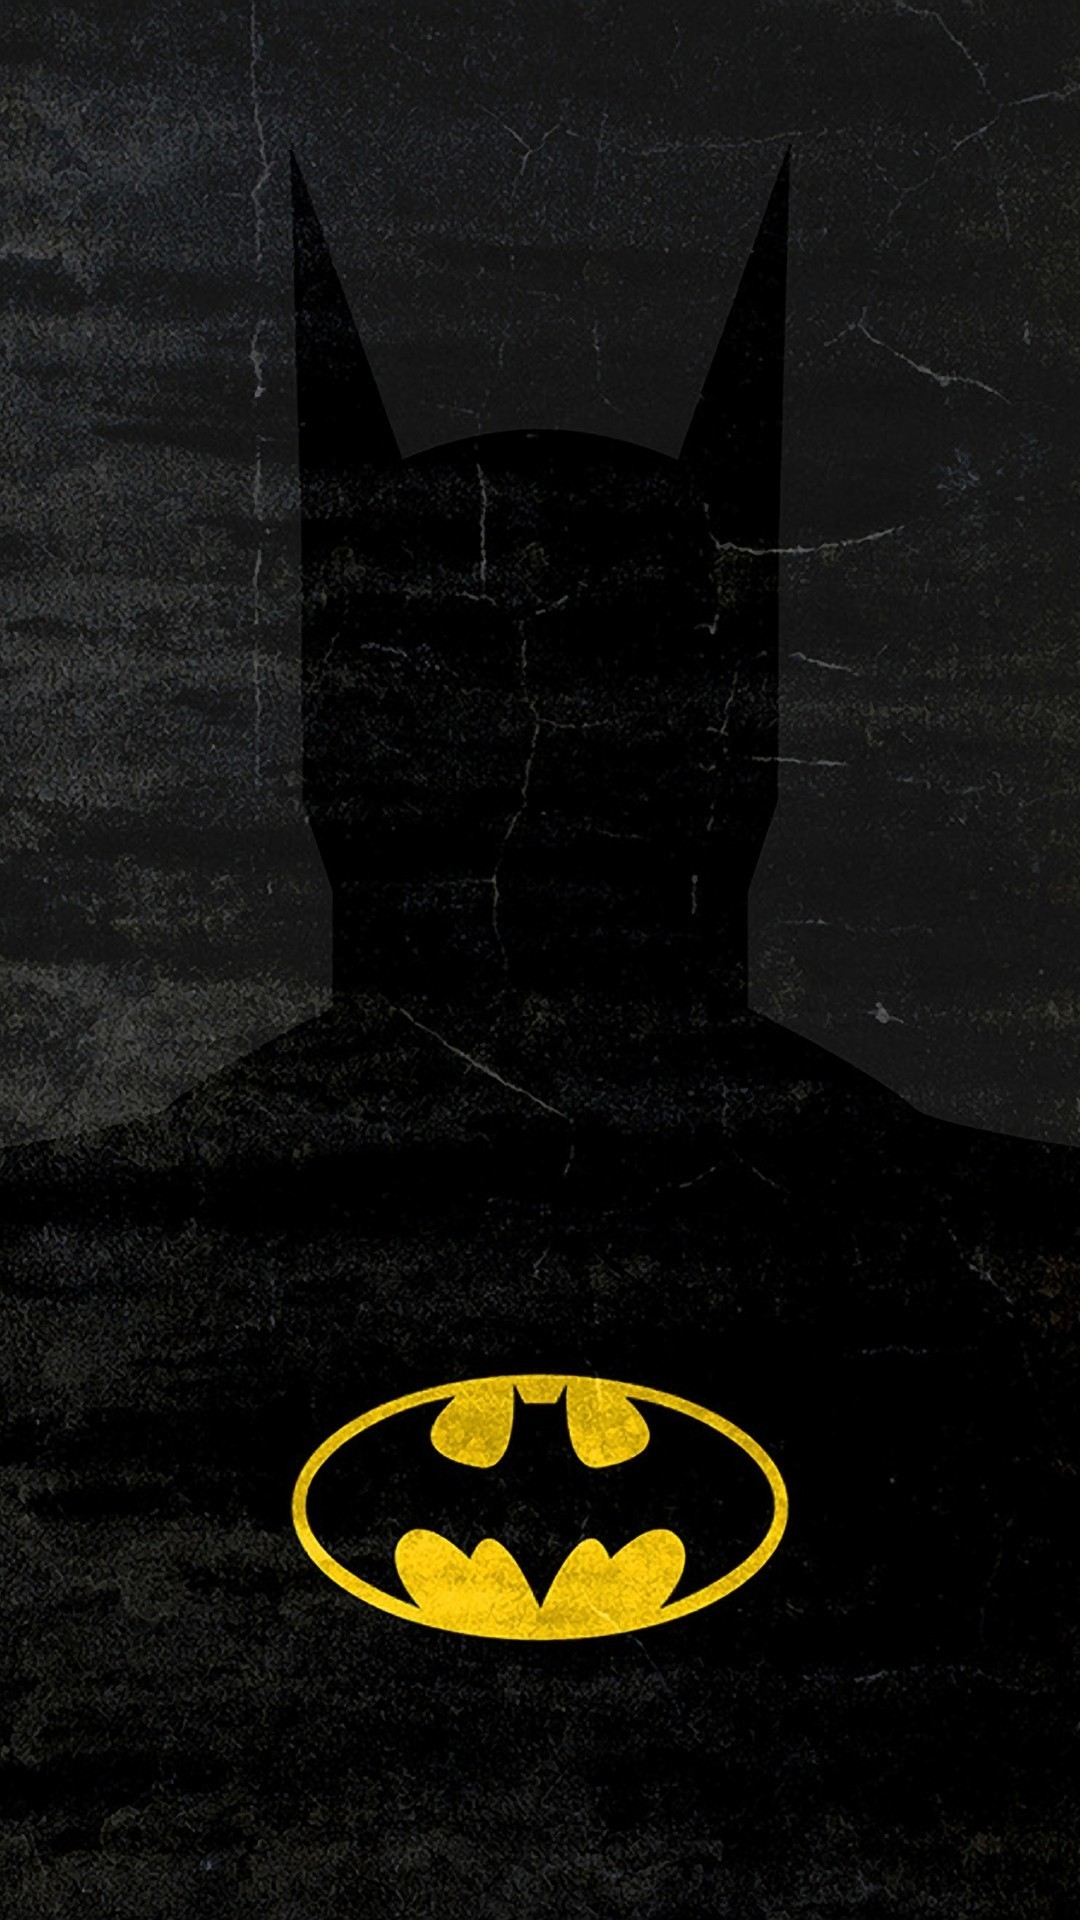 1080x1920 Free Desktop Batman Logo Wallpapers New Batman Logo iPhone Wallpapers Of  Free Desktop Batman Logo Wallpapers